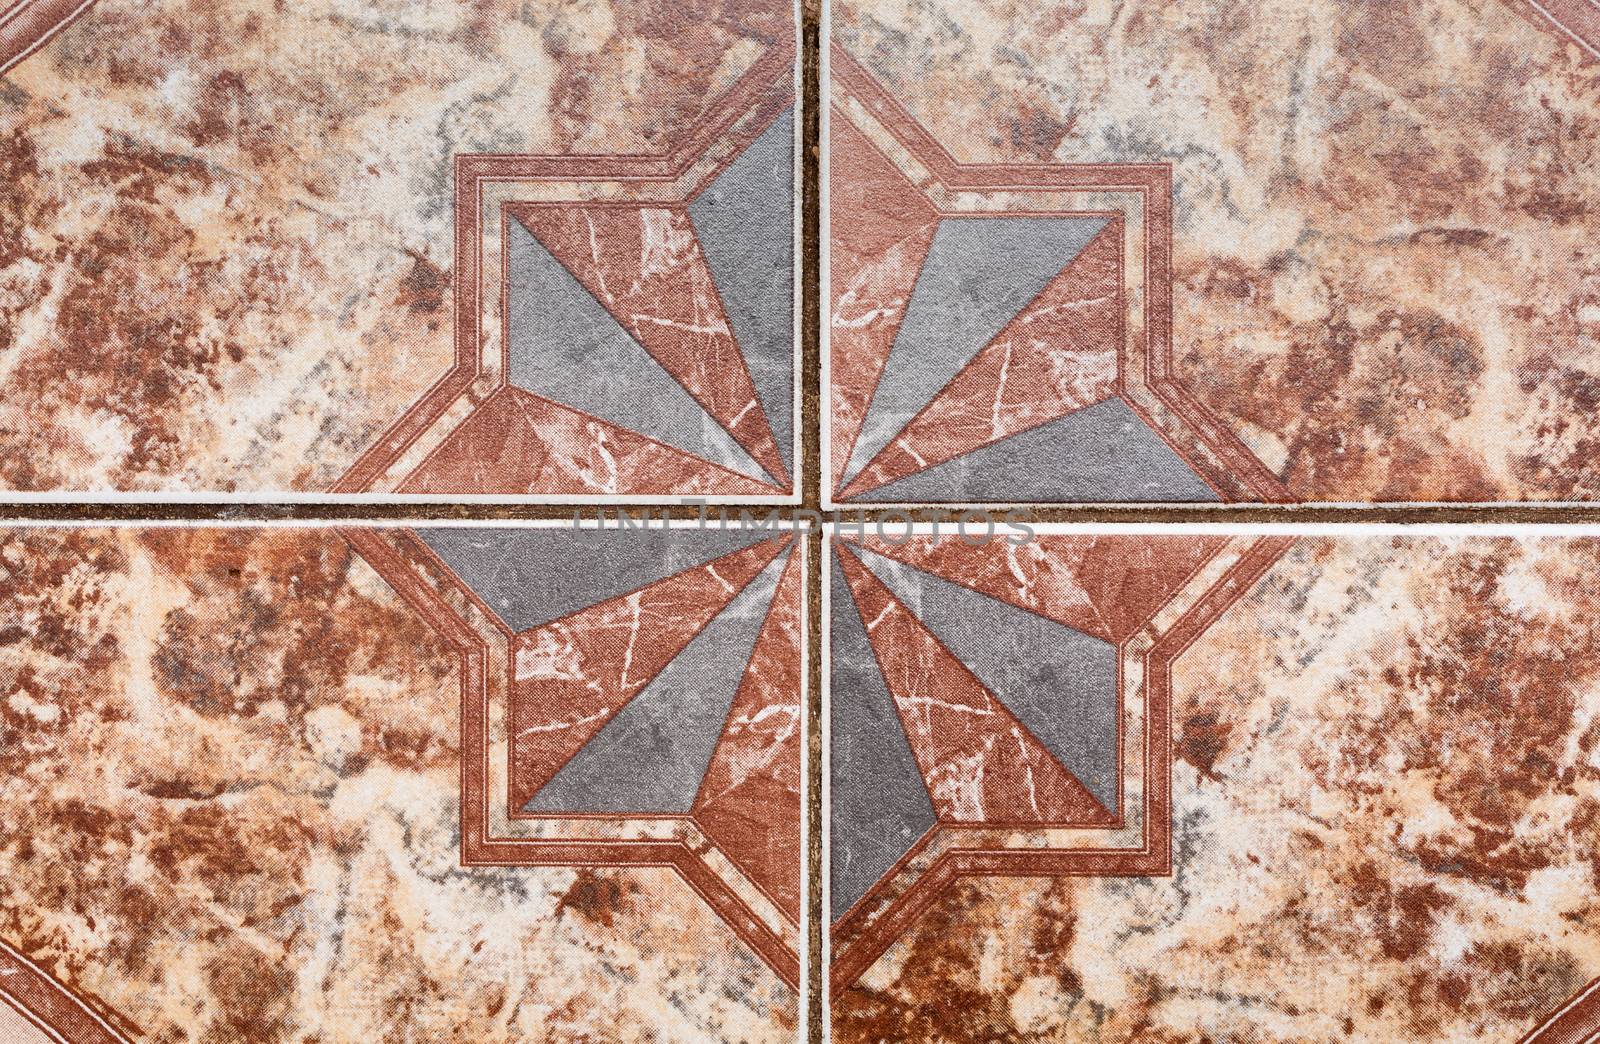 tile pattern of ancient ceramic tiles.